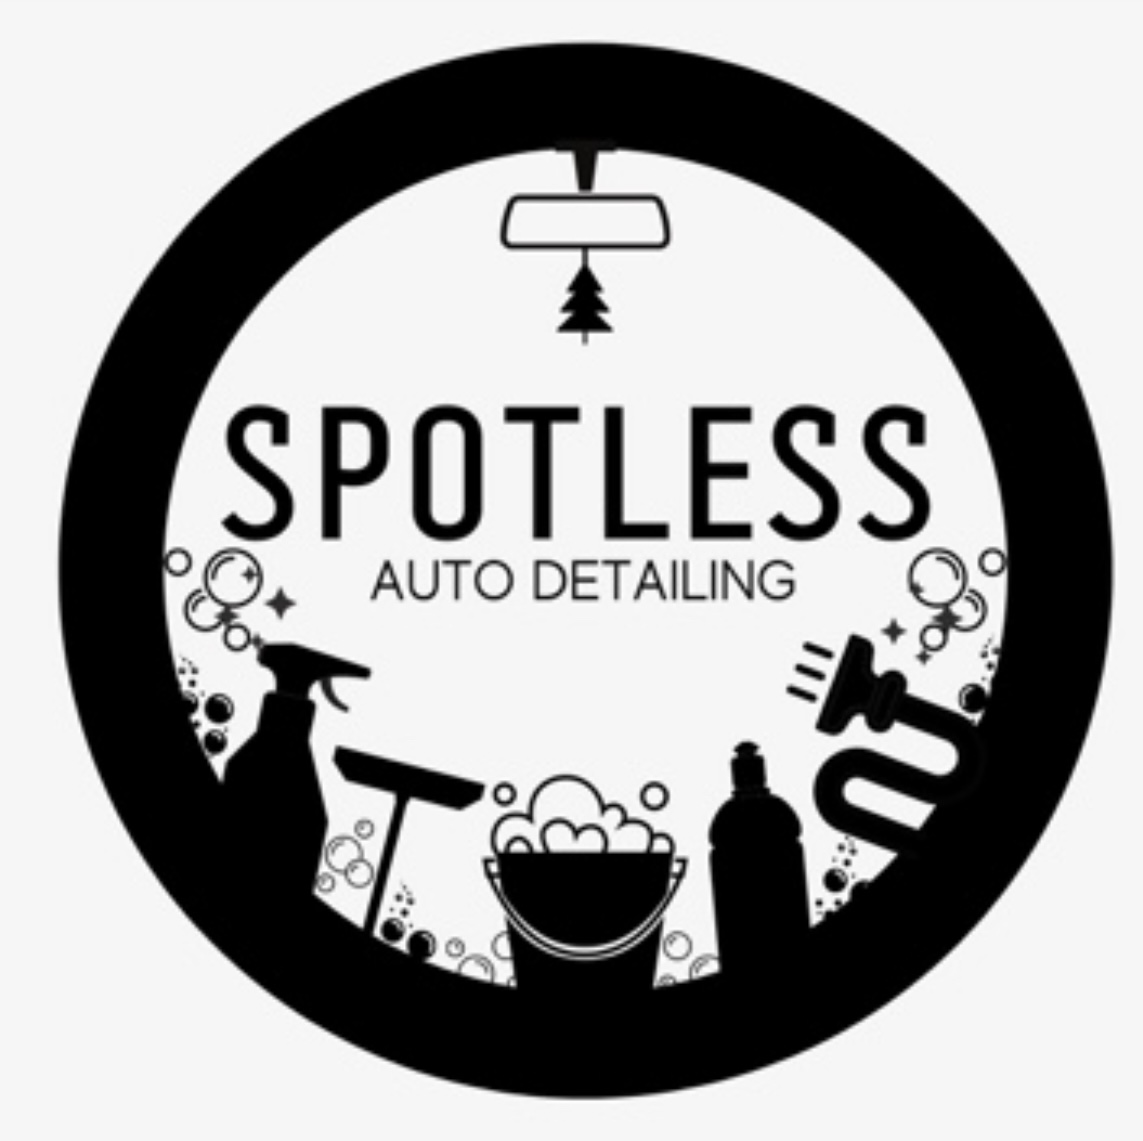 Spotless Auto Detailing LLC 101 S Main St, Van Buren Ohio 45840